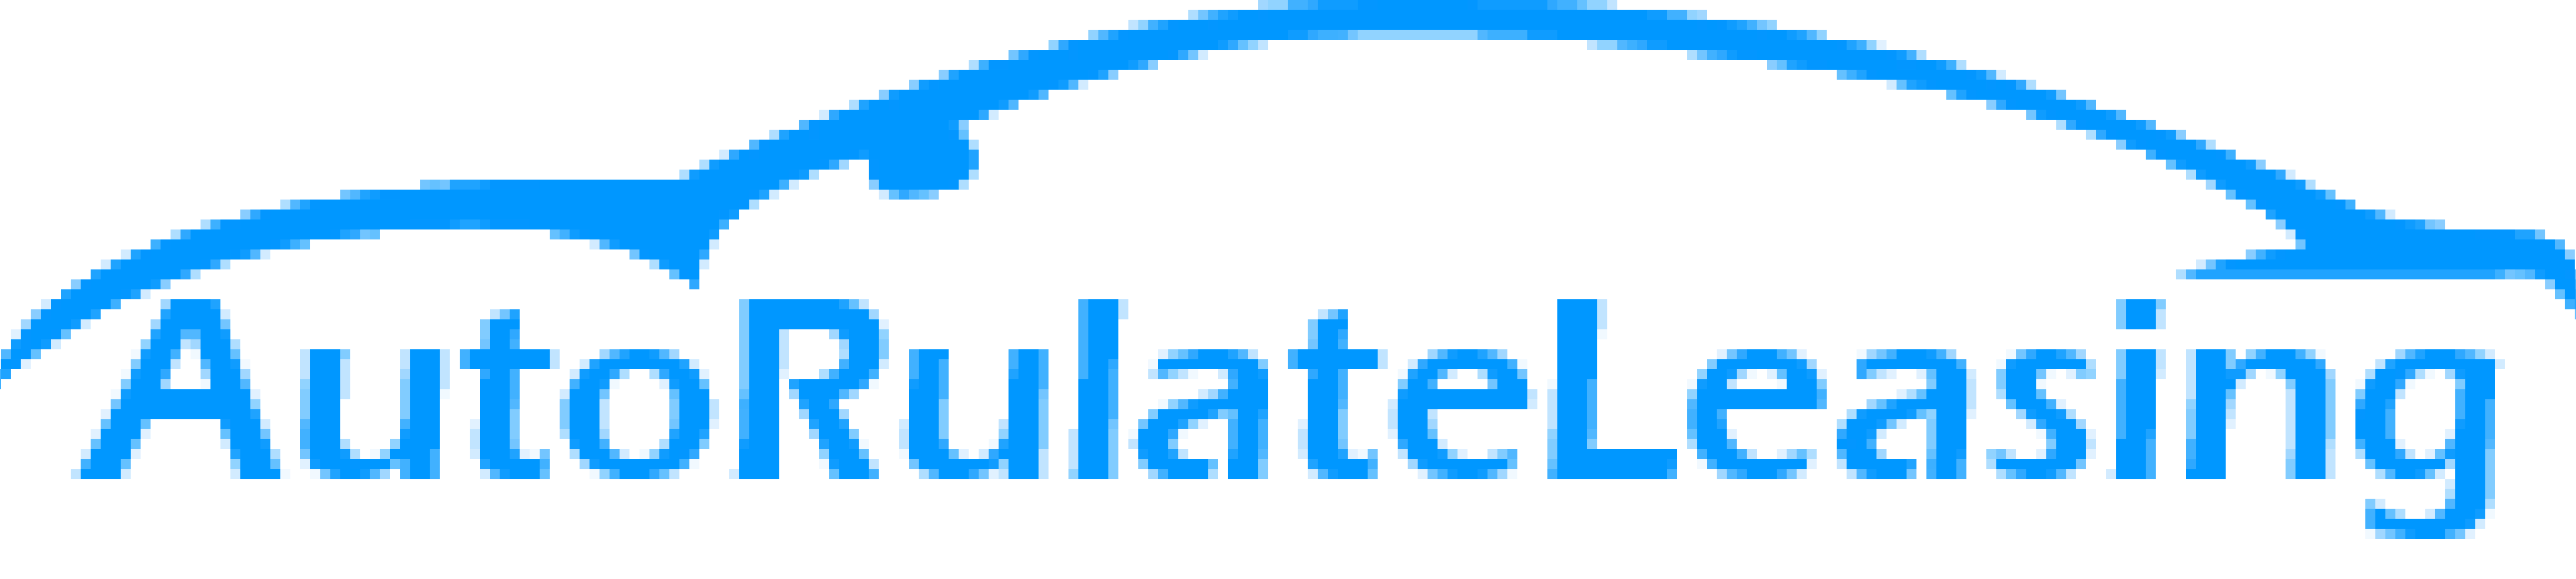 Dealer logo